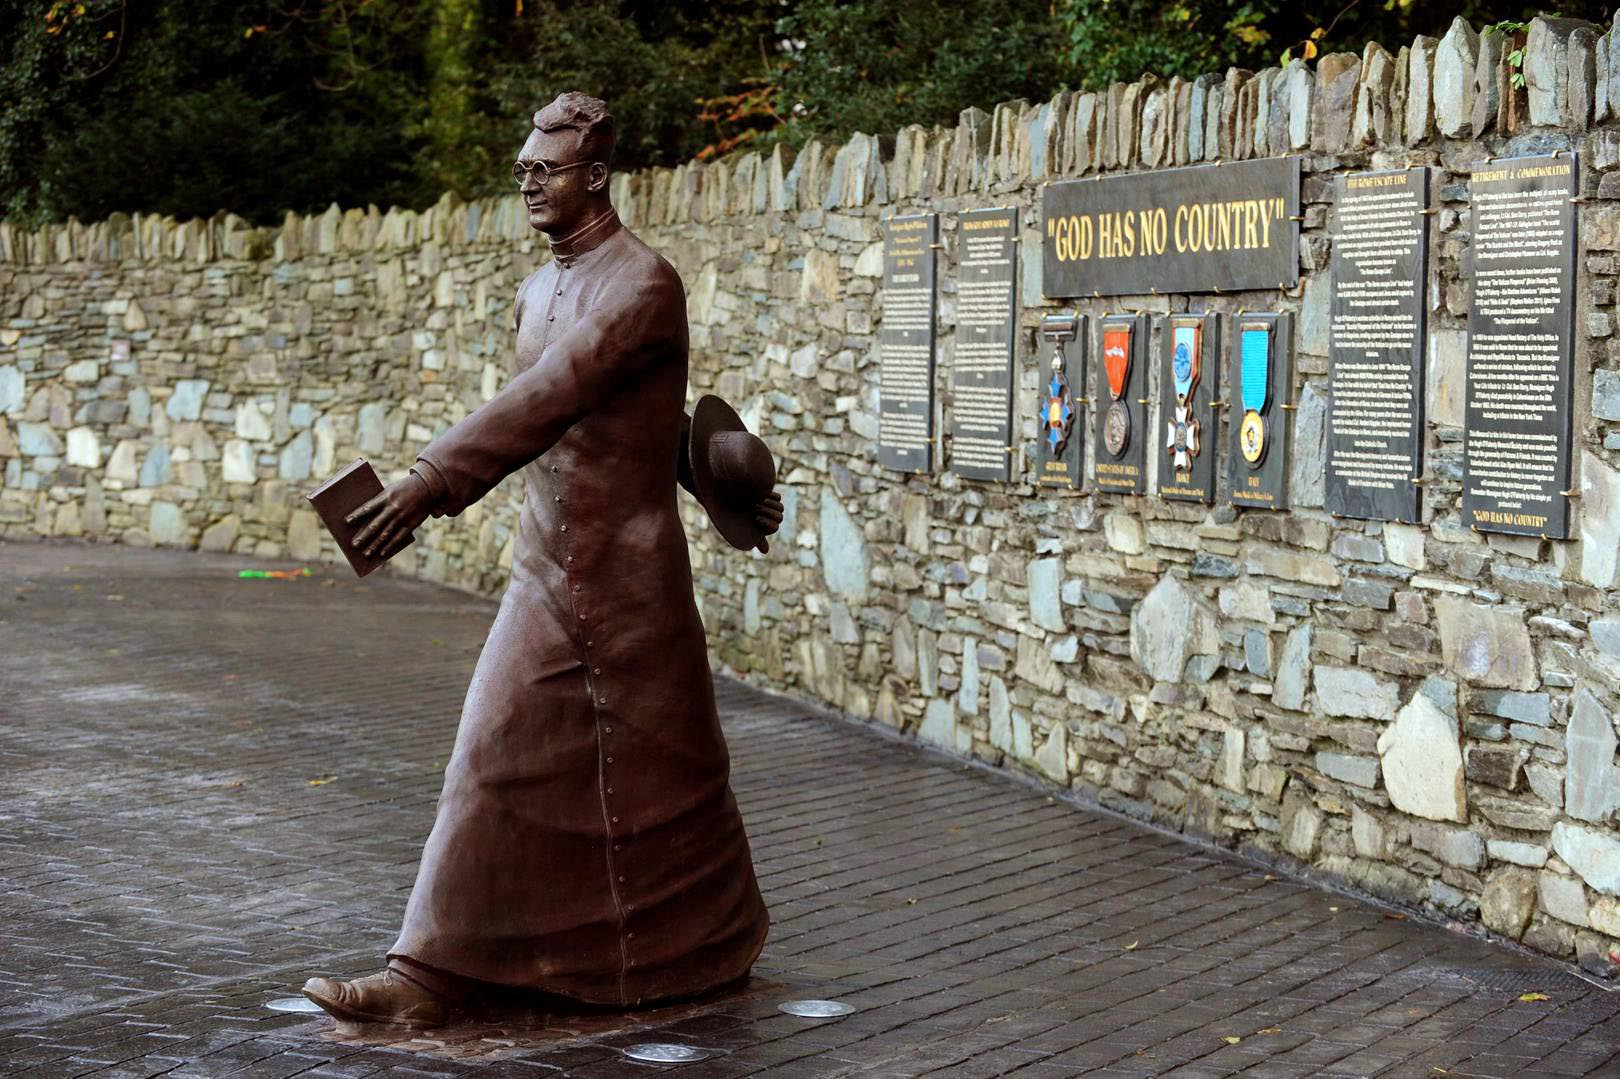 Monsignor Hugh O'Flaherty Statue in Killarney, County Kerry